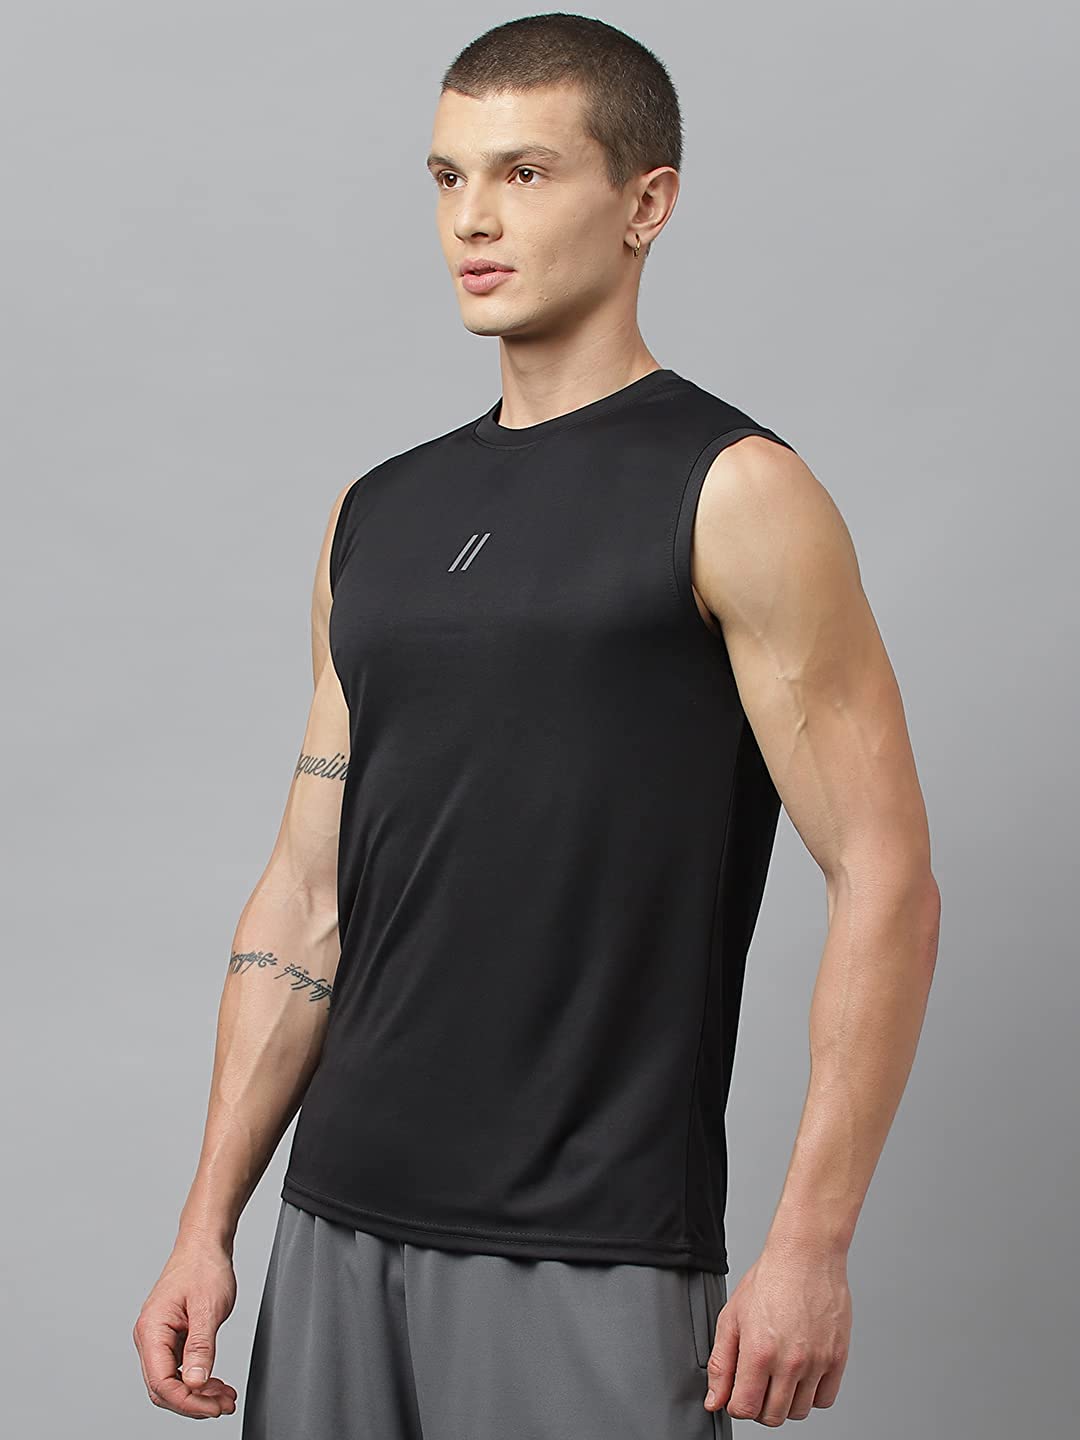 Men’s Slim Fit Polyester Sleeveless T Shirt (combo)(Black/Maroon)